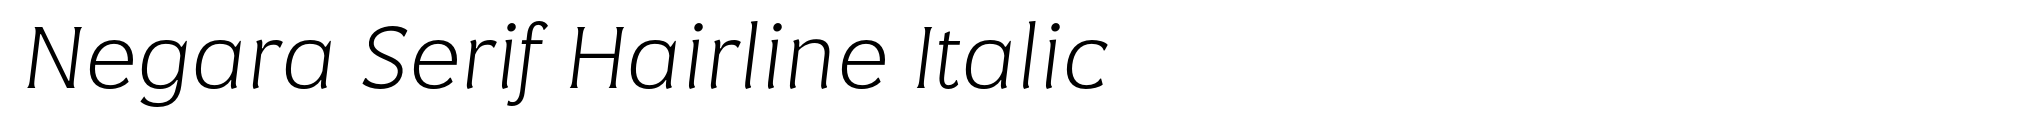 Negara Serif Hairline Italic image